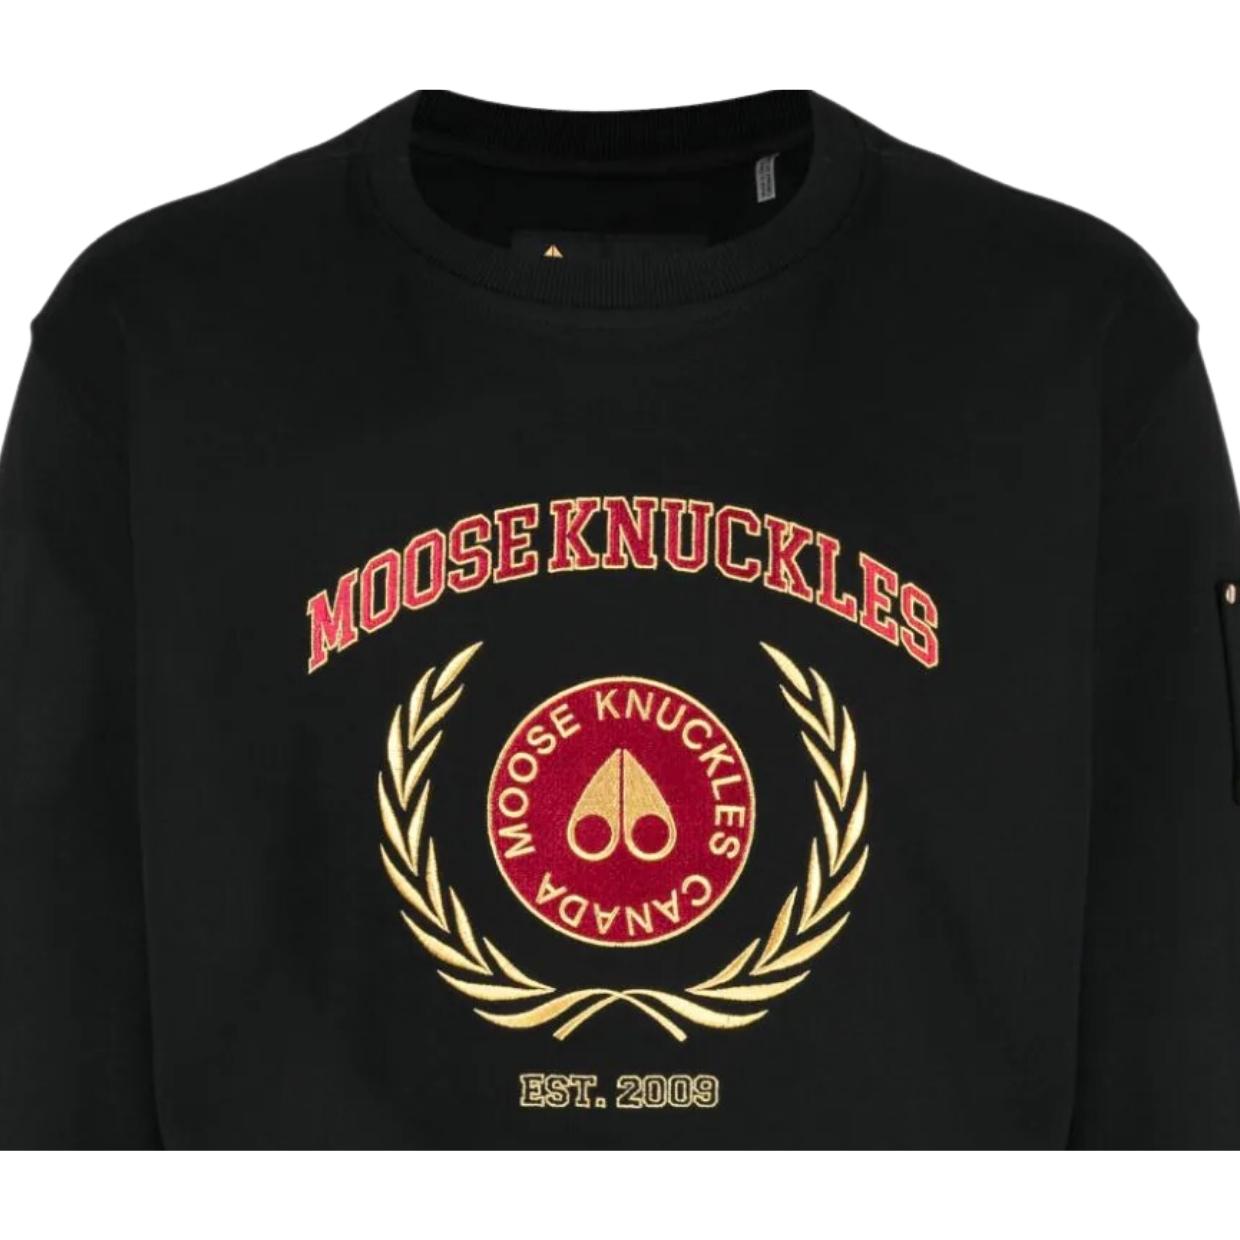 Moose Knuckles Cooledge Crew Black Sweatshirt